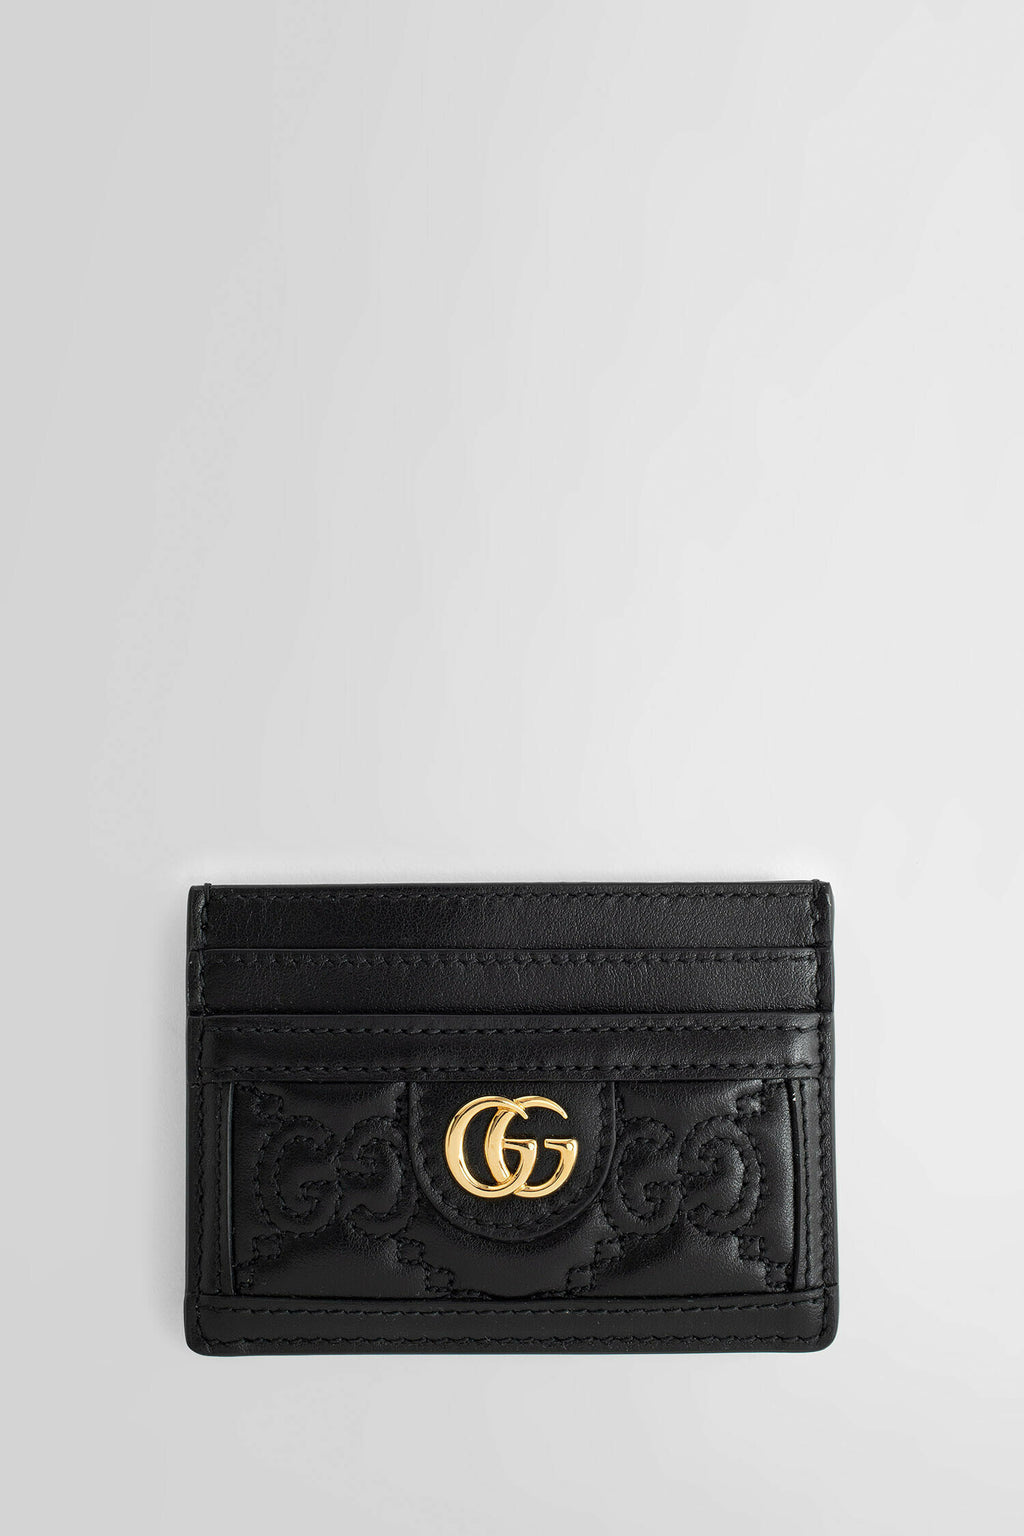 Gucci Women's Wallets for Sale 